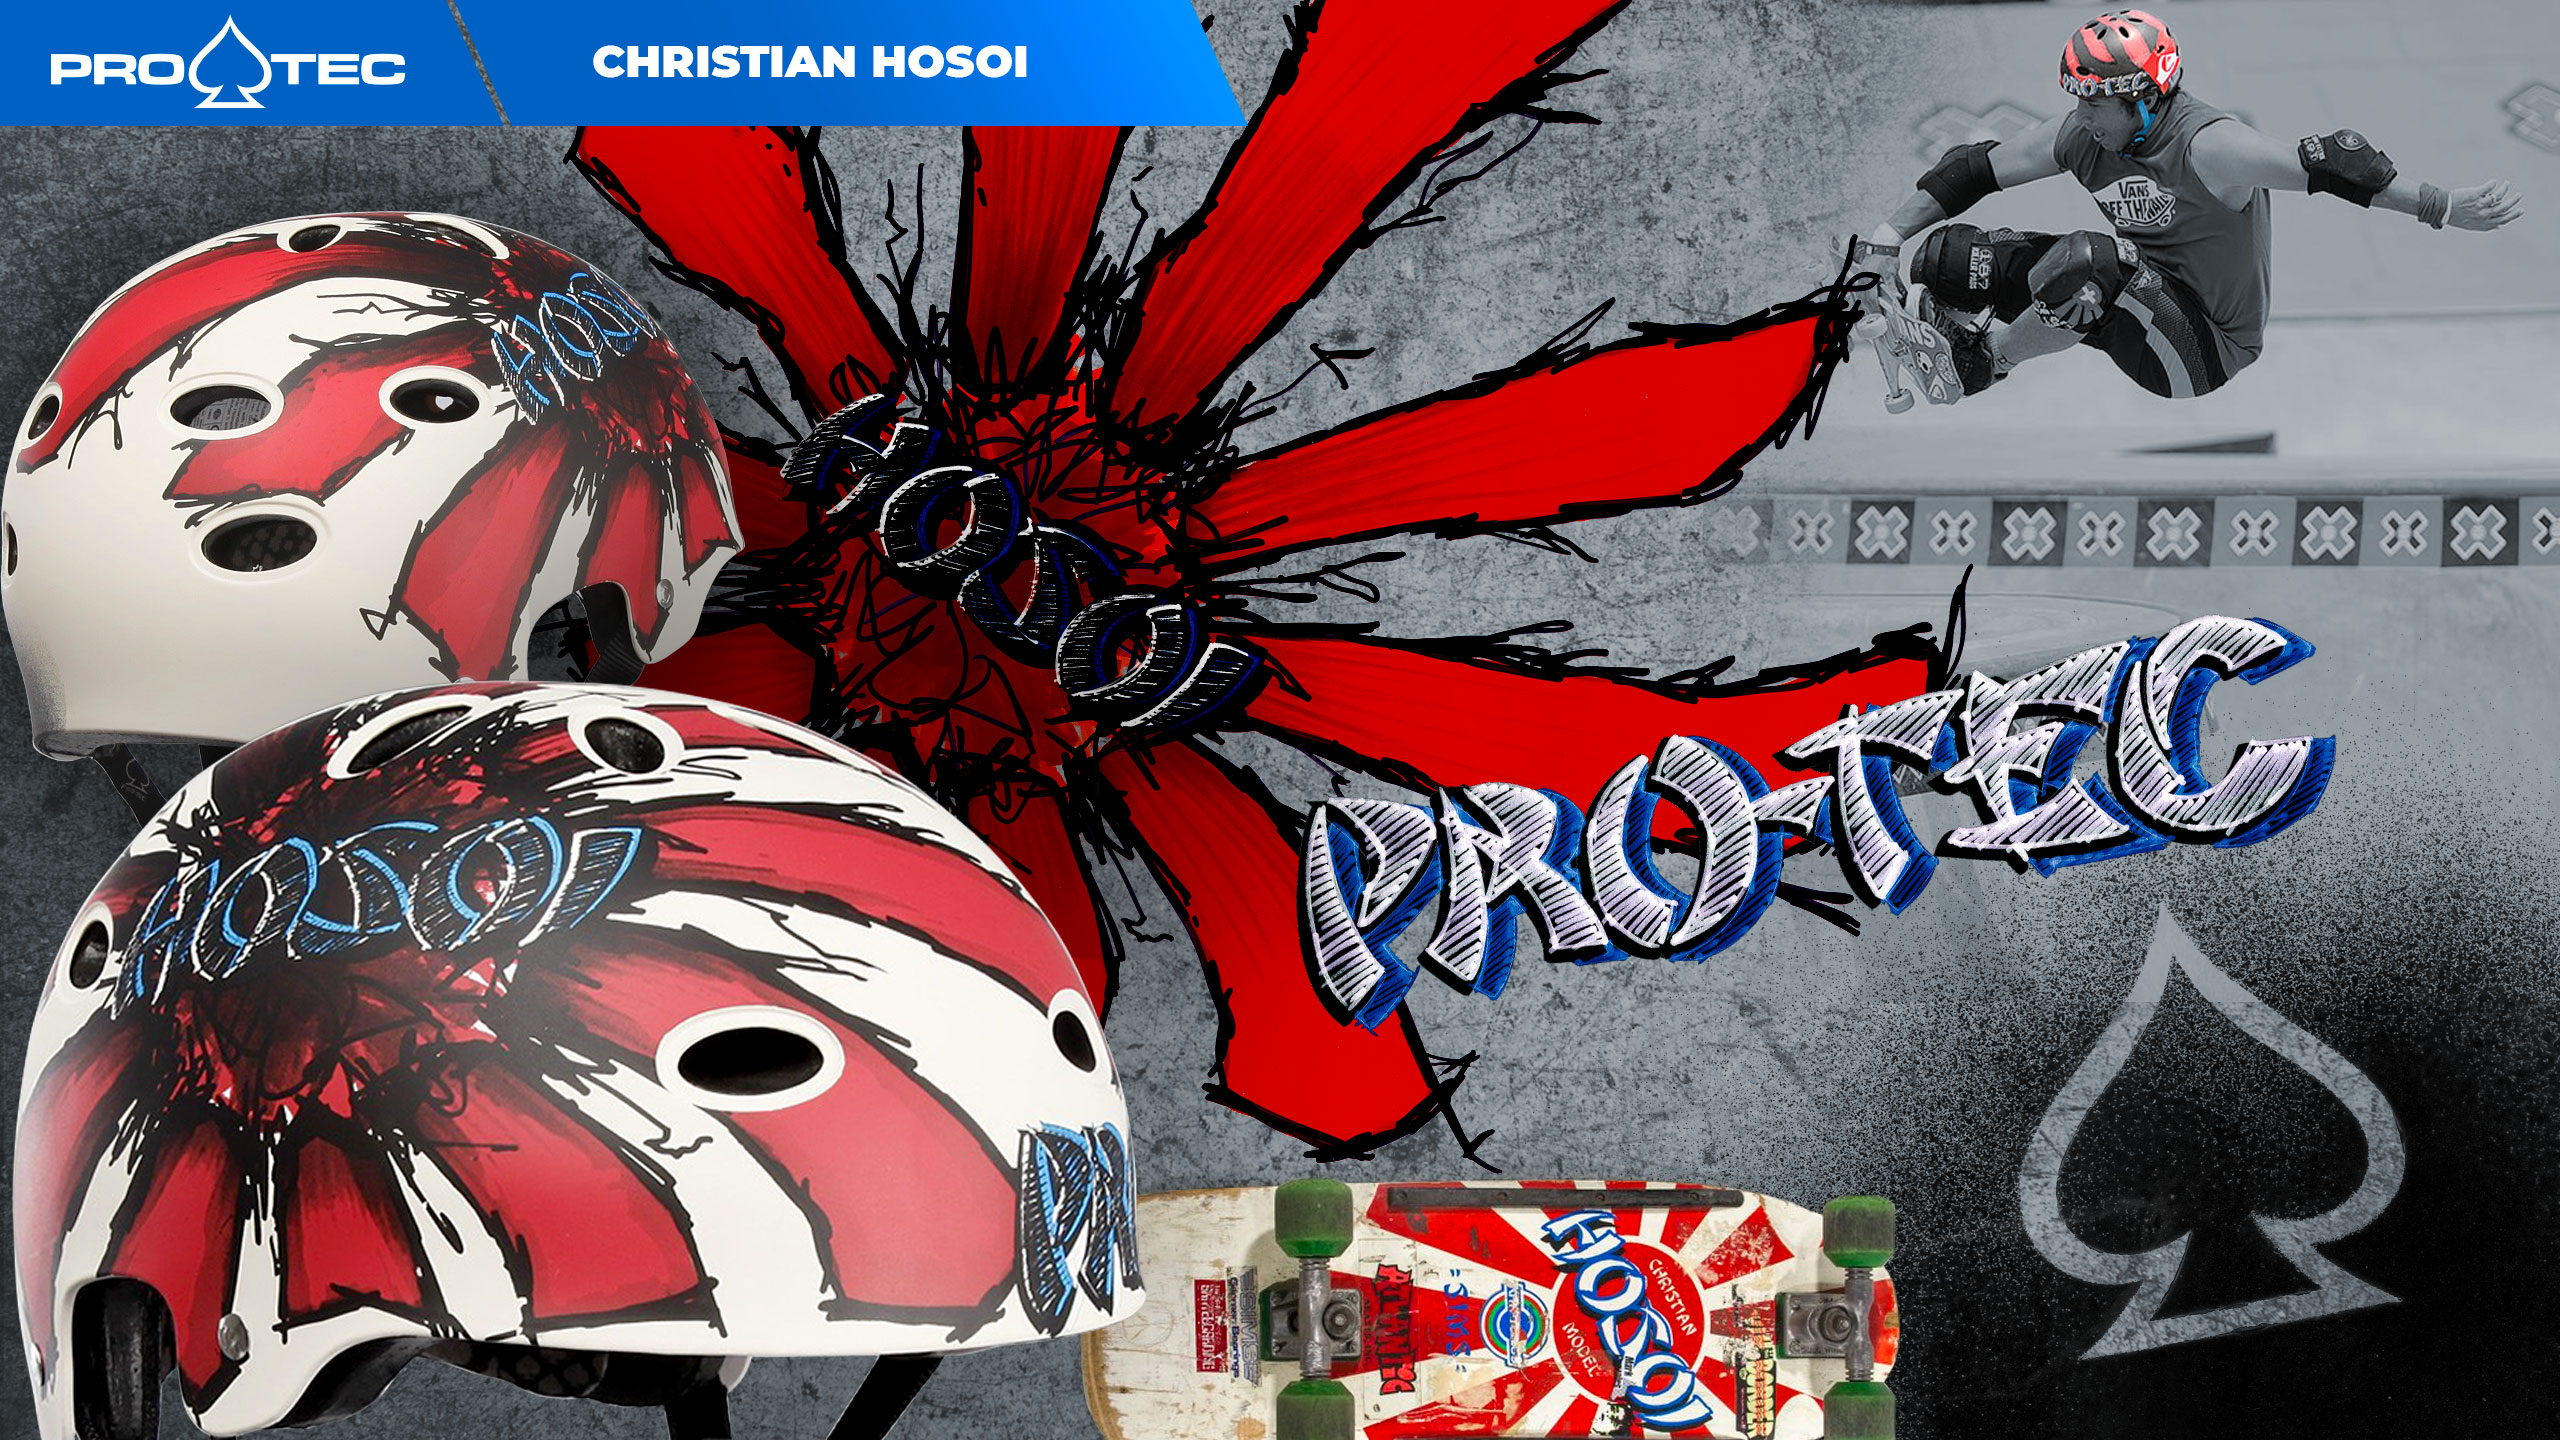 Pro-tec Christian Hosoi Helmet Graphic